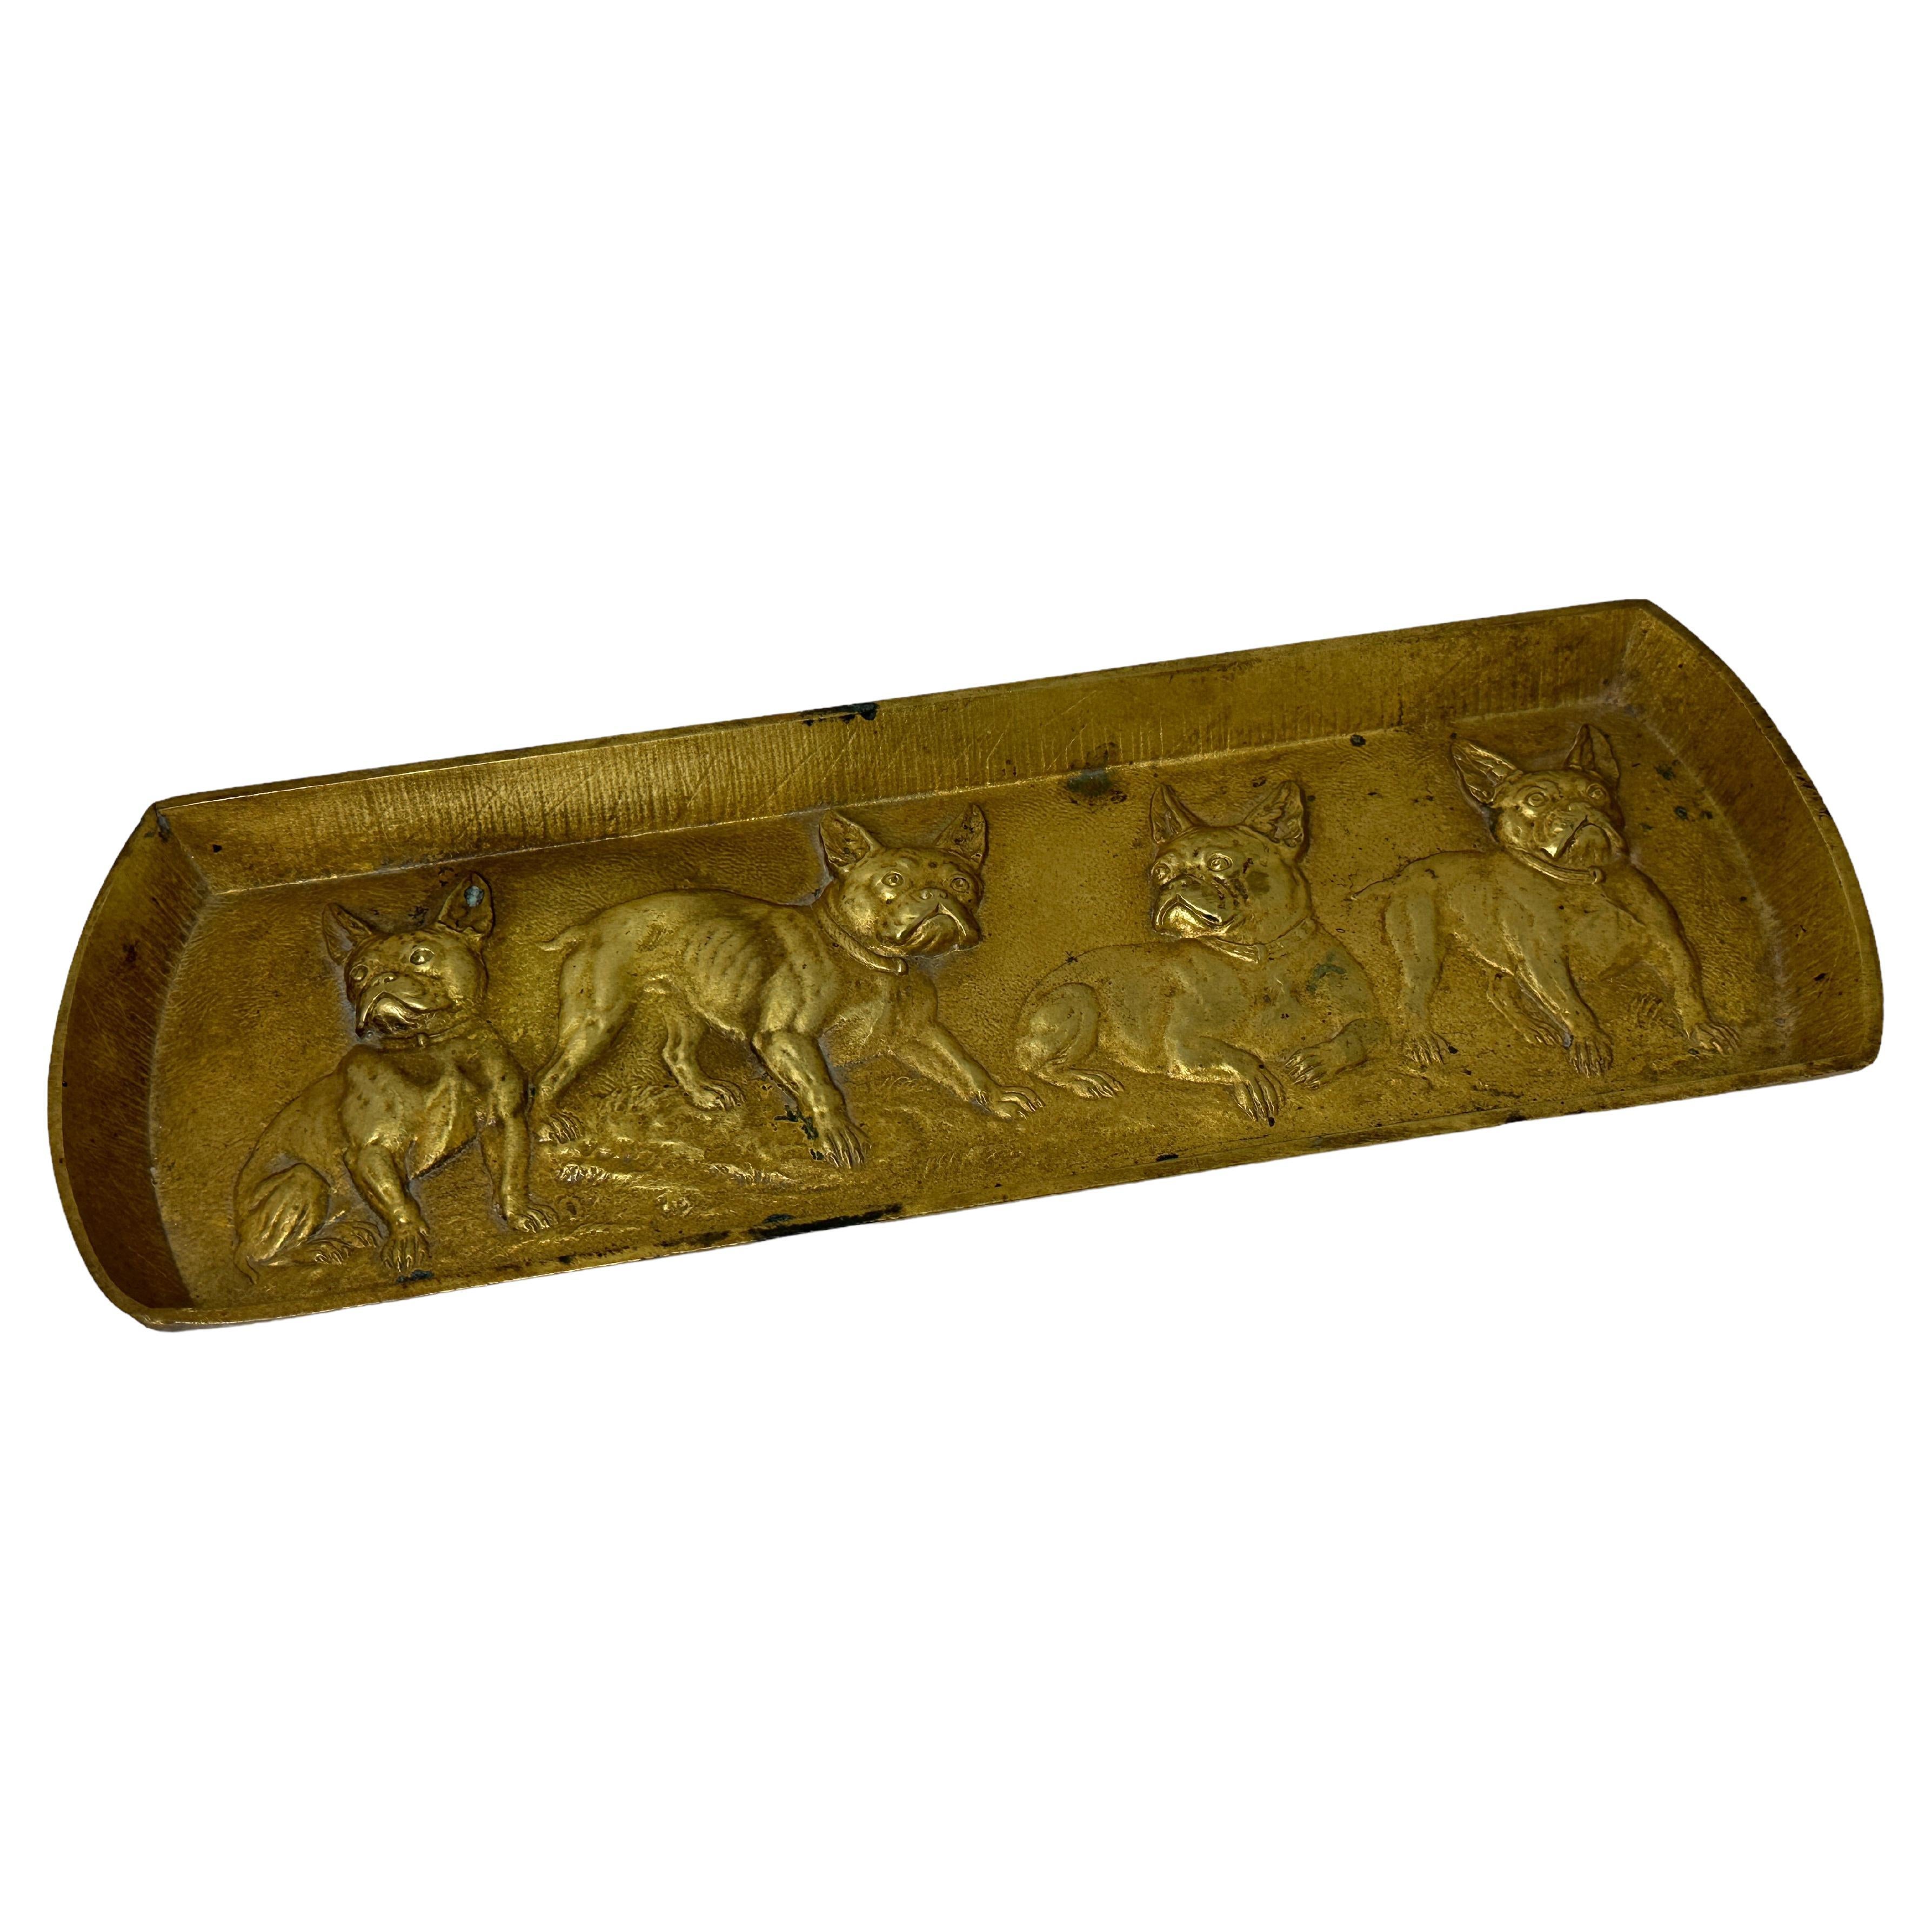 Bulldog Pug Dogs Vienna Bronze Trinket Tray or Catchall, antique Austria 1890s